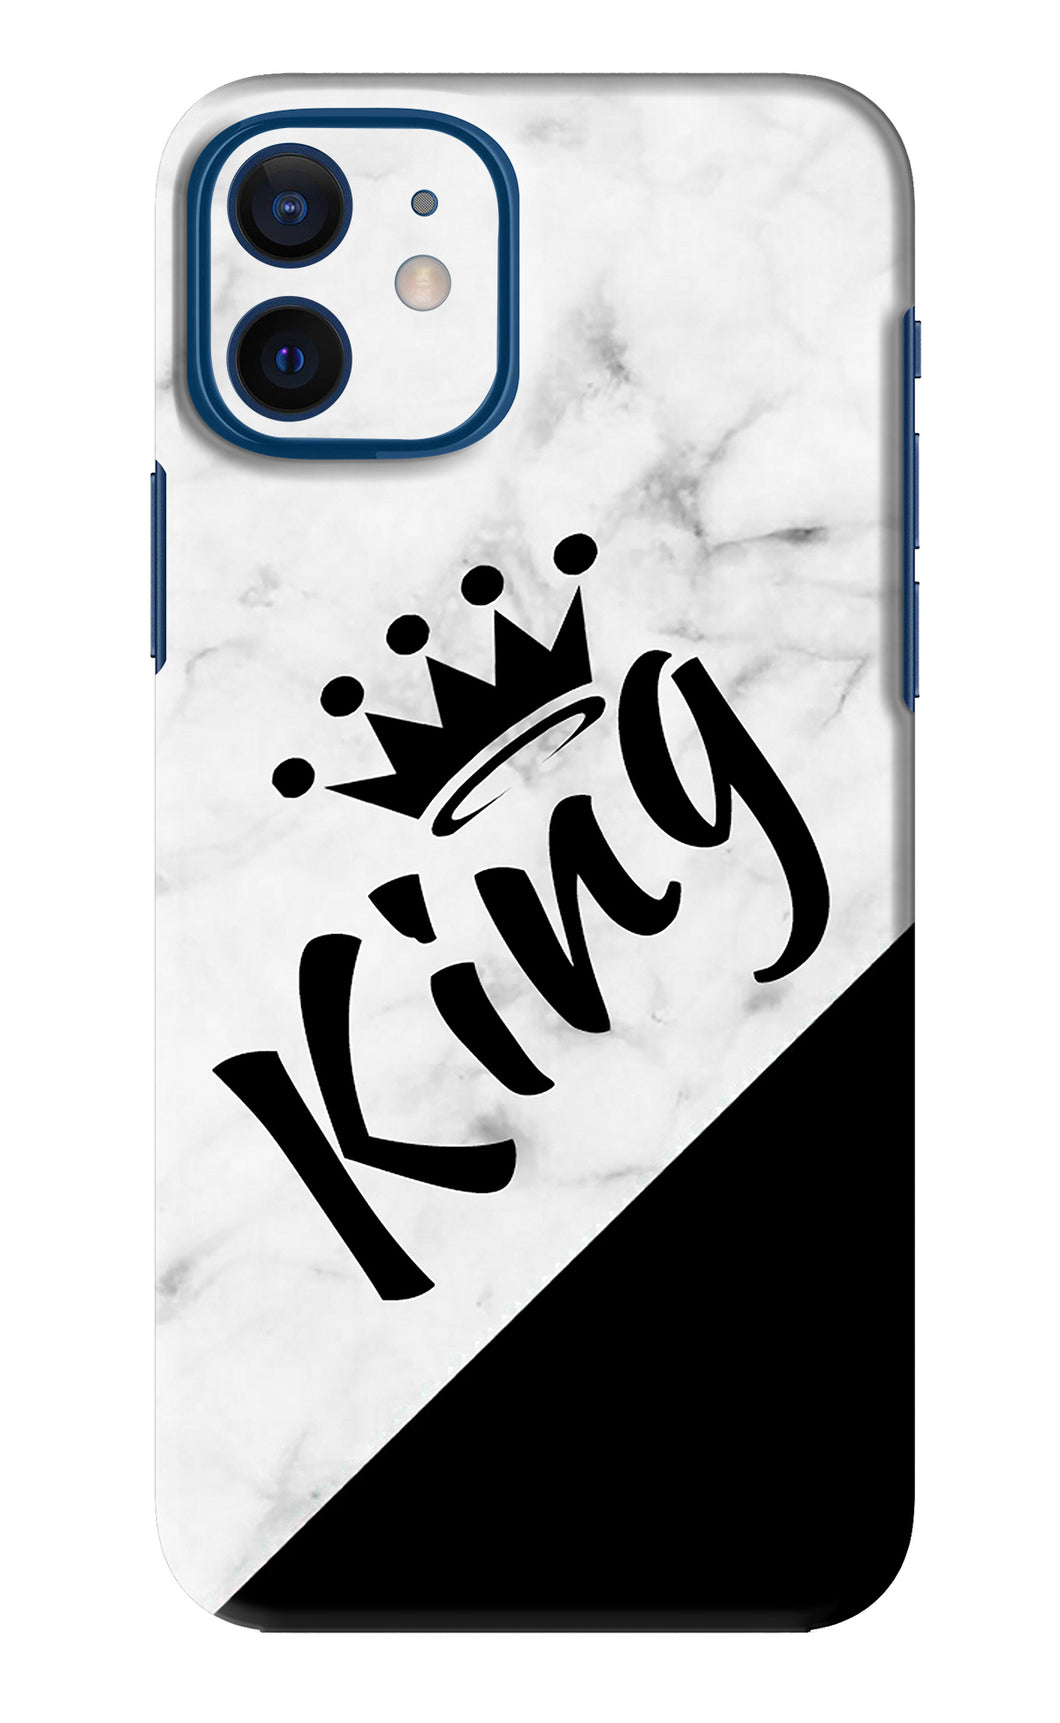 King iPhone 12 Back Skin Wrap